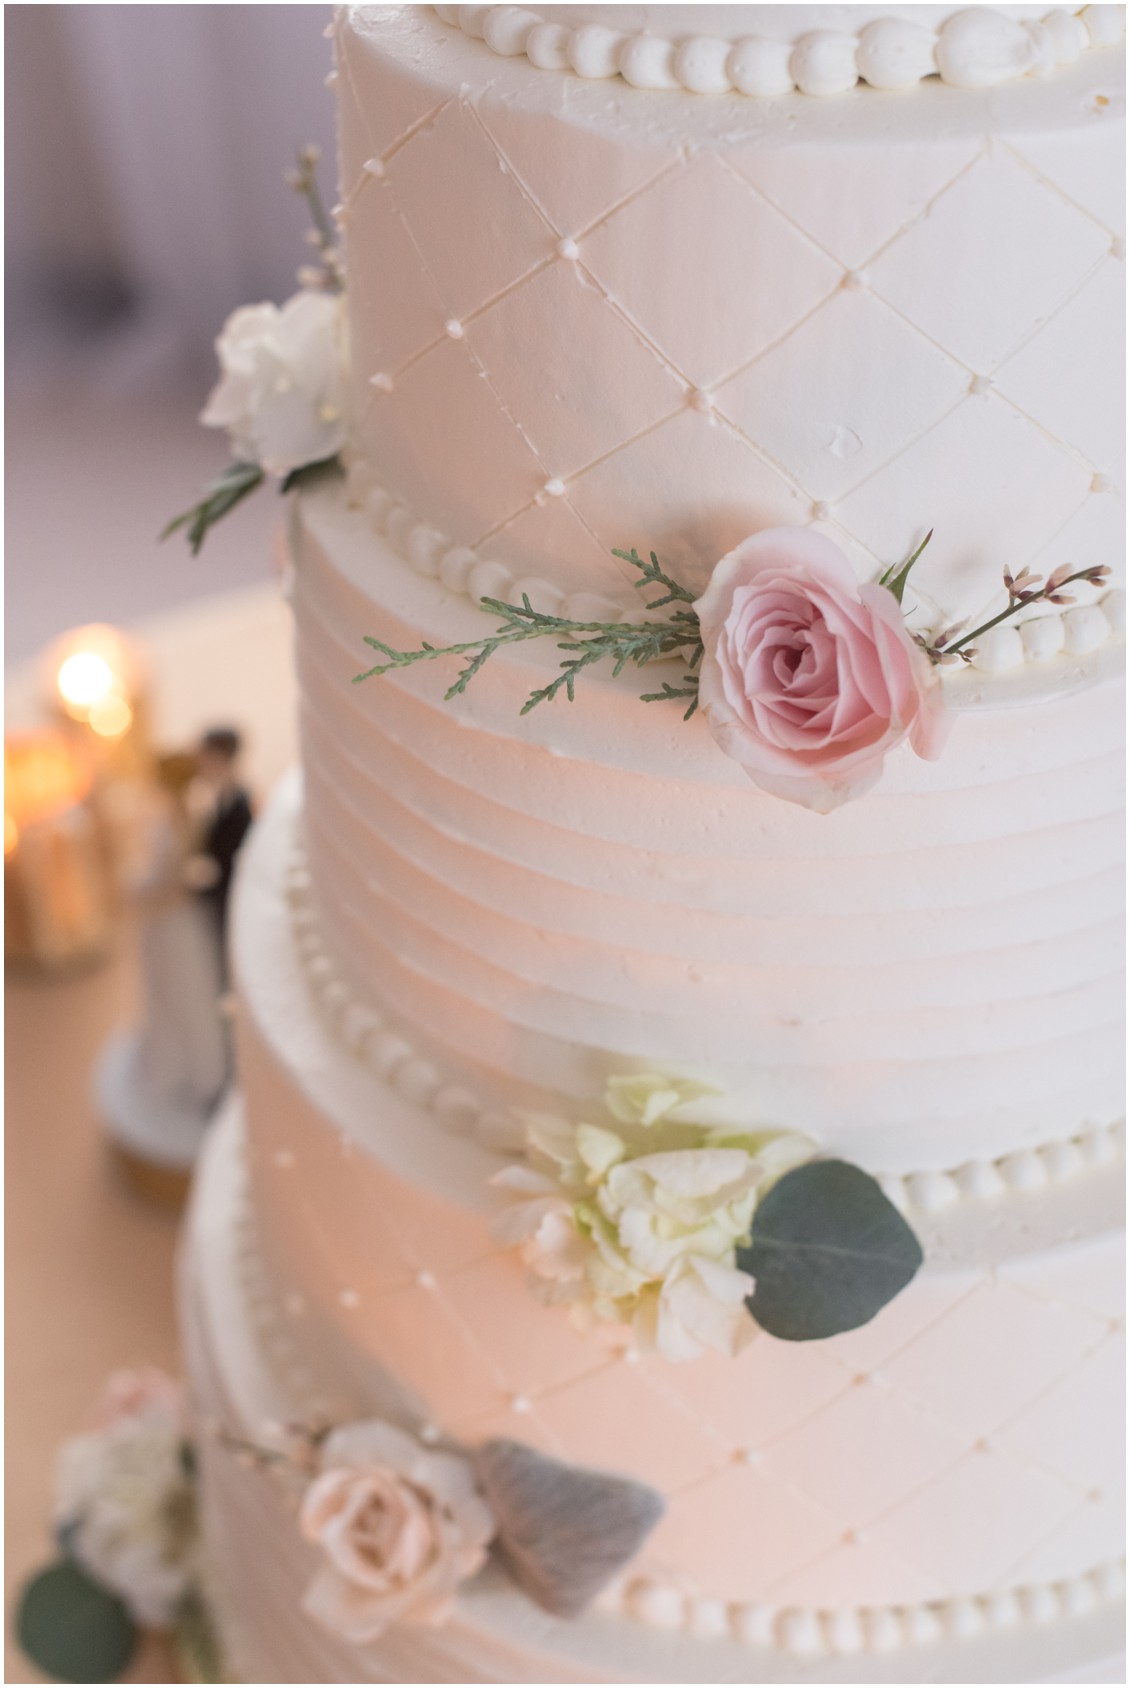 Detail of cake with blush flowers, white details, sage greenery  | My Eastern Shore Wedding | Karena Dixon | Monteray Farms